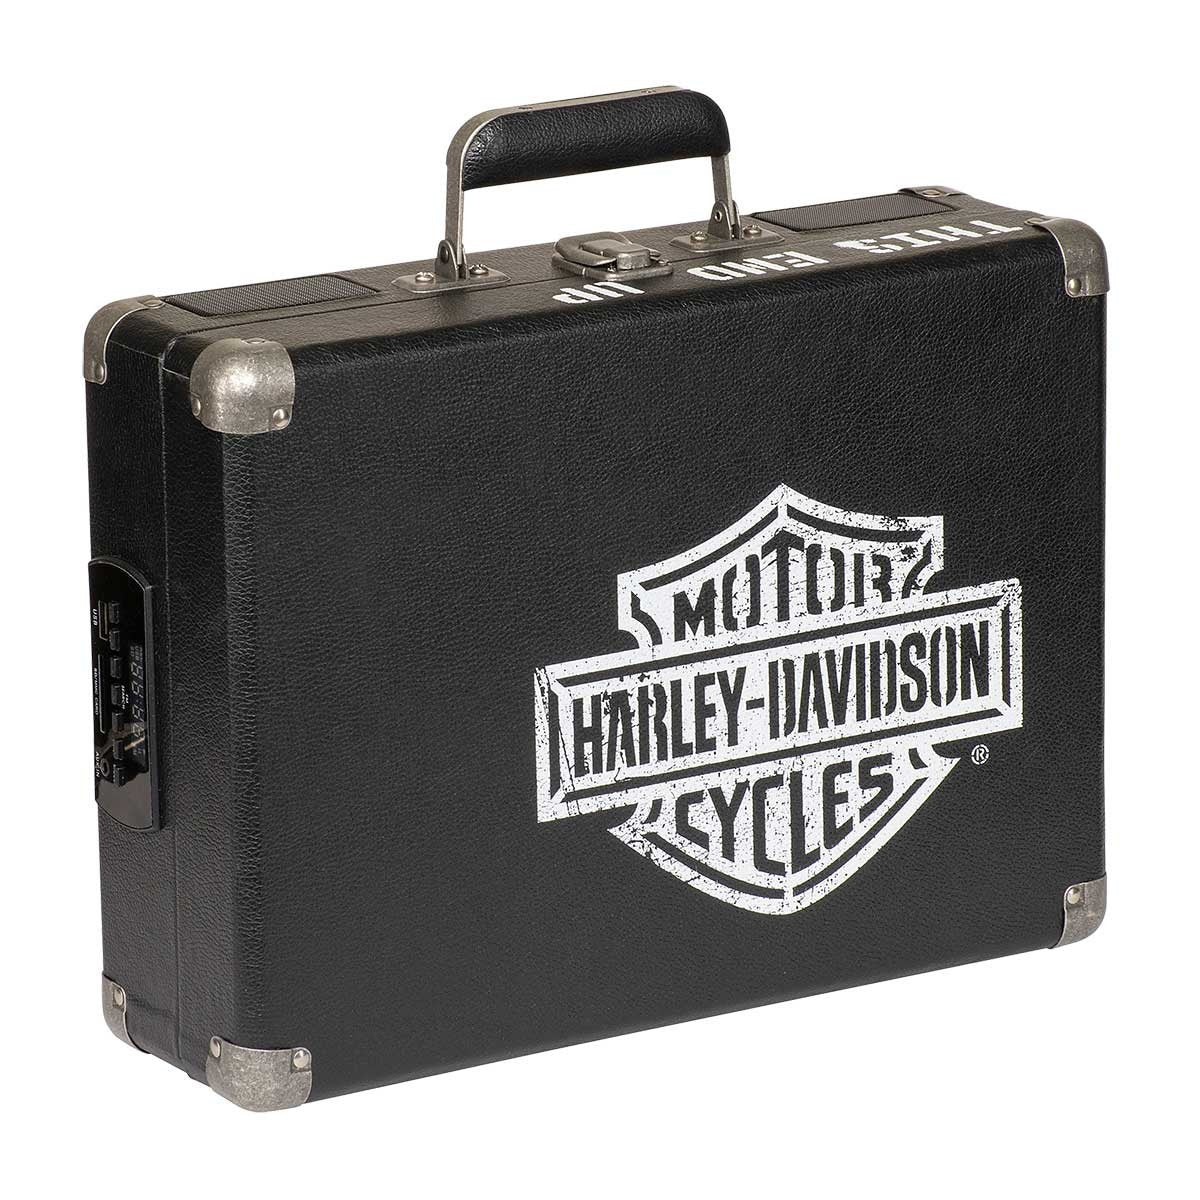 Harley-Davidson B&amp; S Portable Record Player